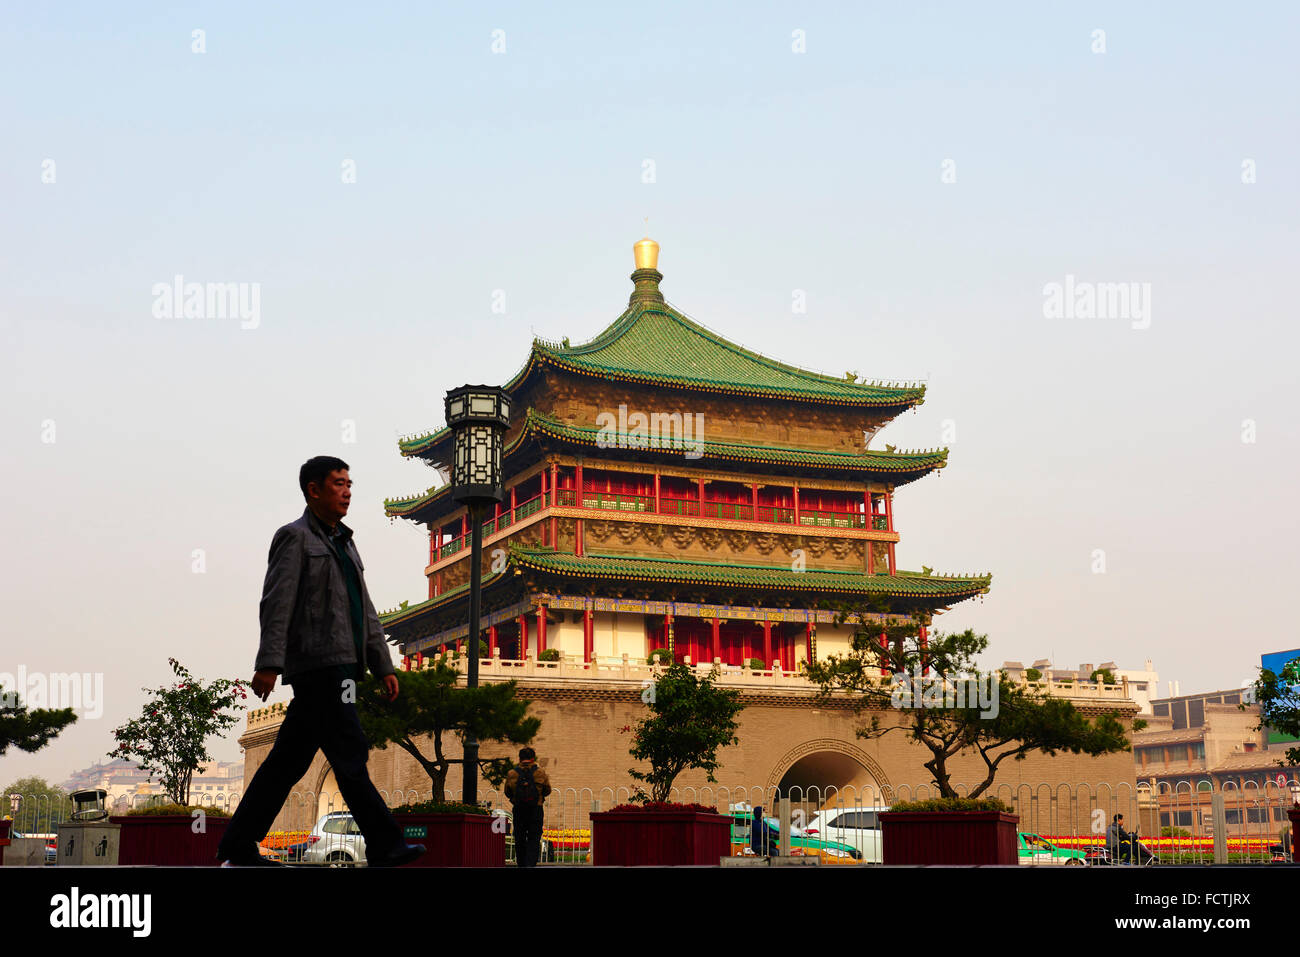 Cina, provincia di Shaanxi, Xian, Torre Campanaria del XIV secolo ricostruita da Qing nel 1739 Foto Stock